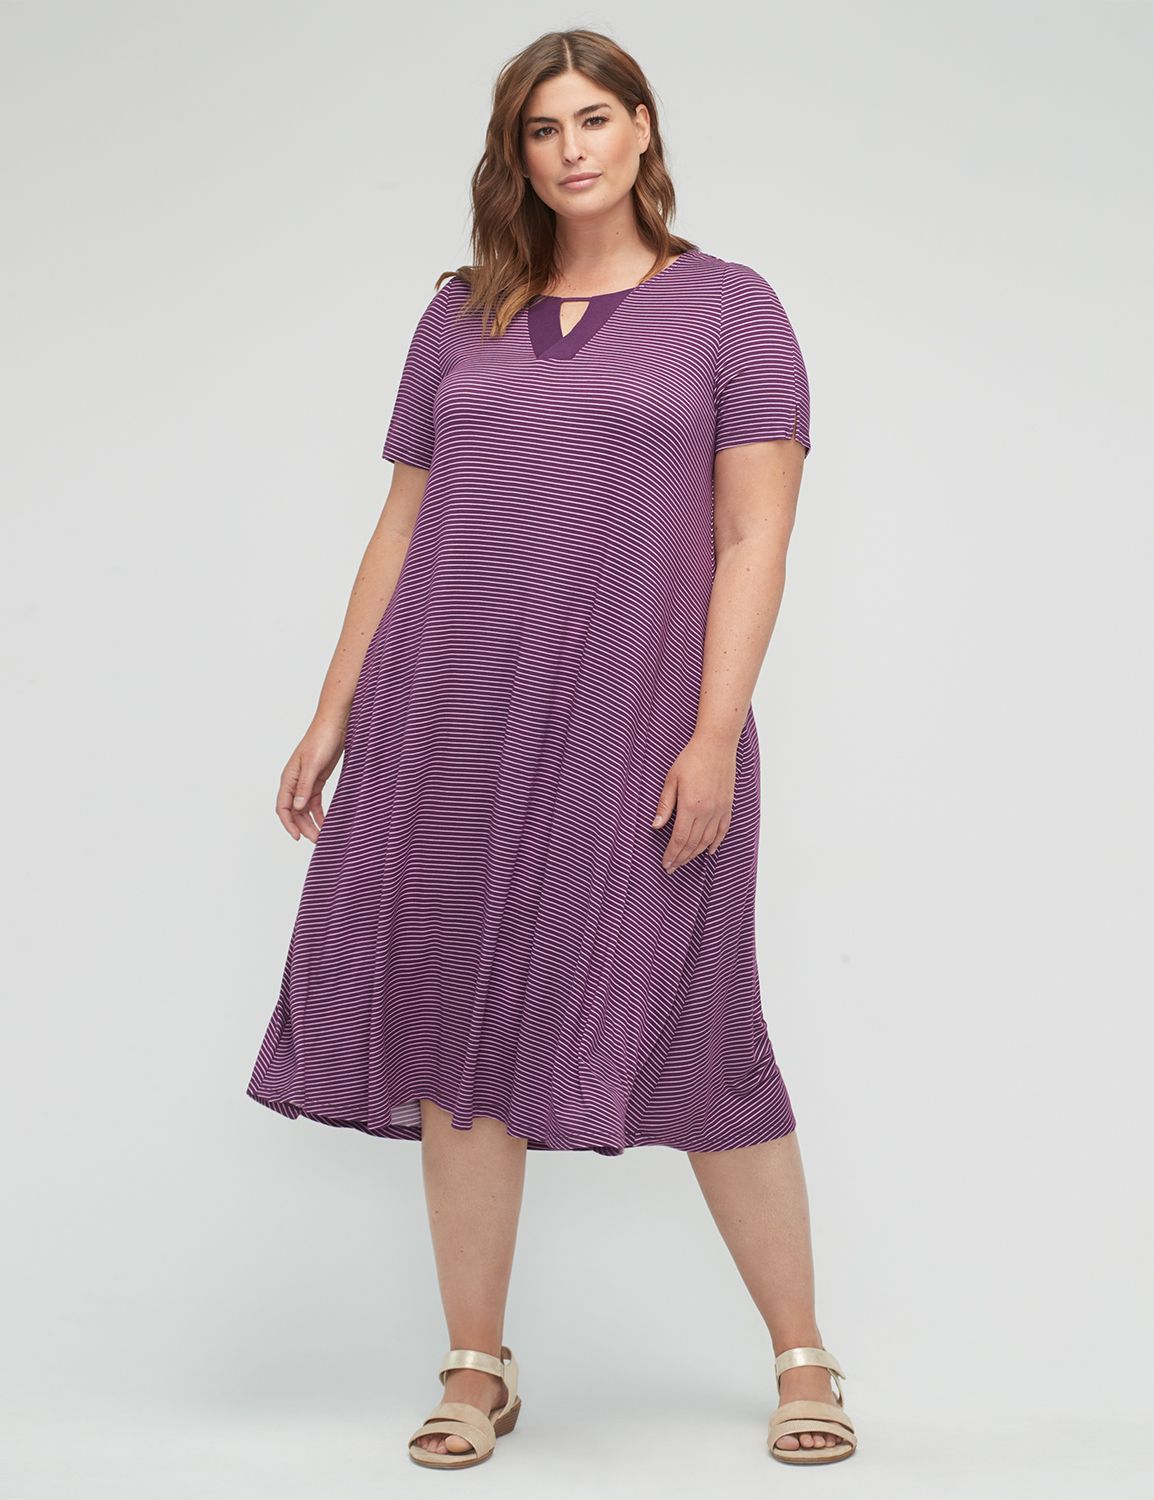 new look plus size dresses sale